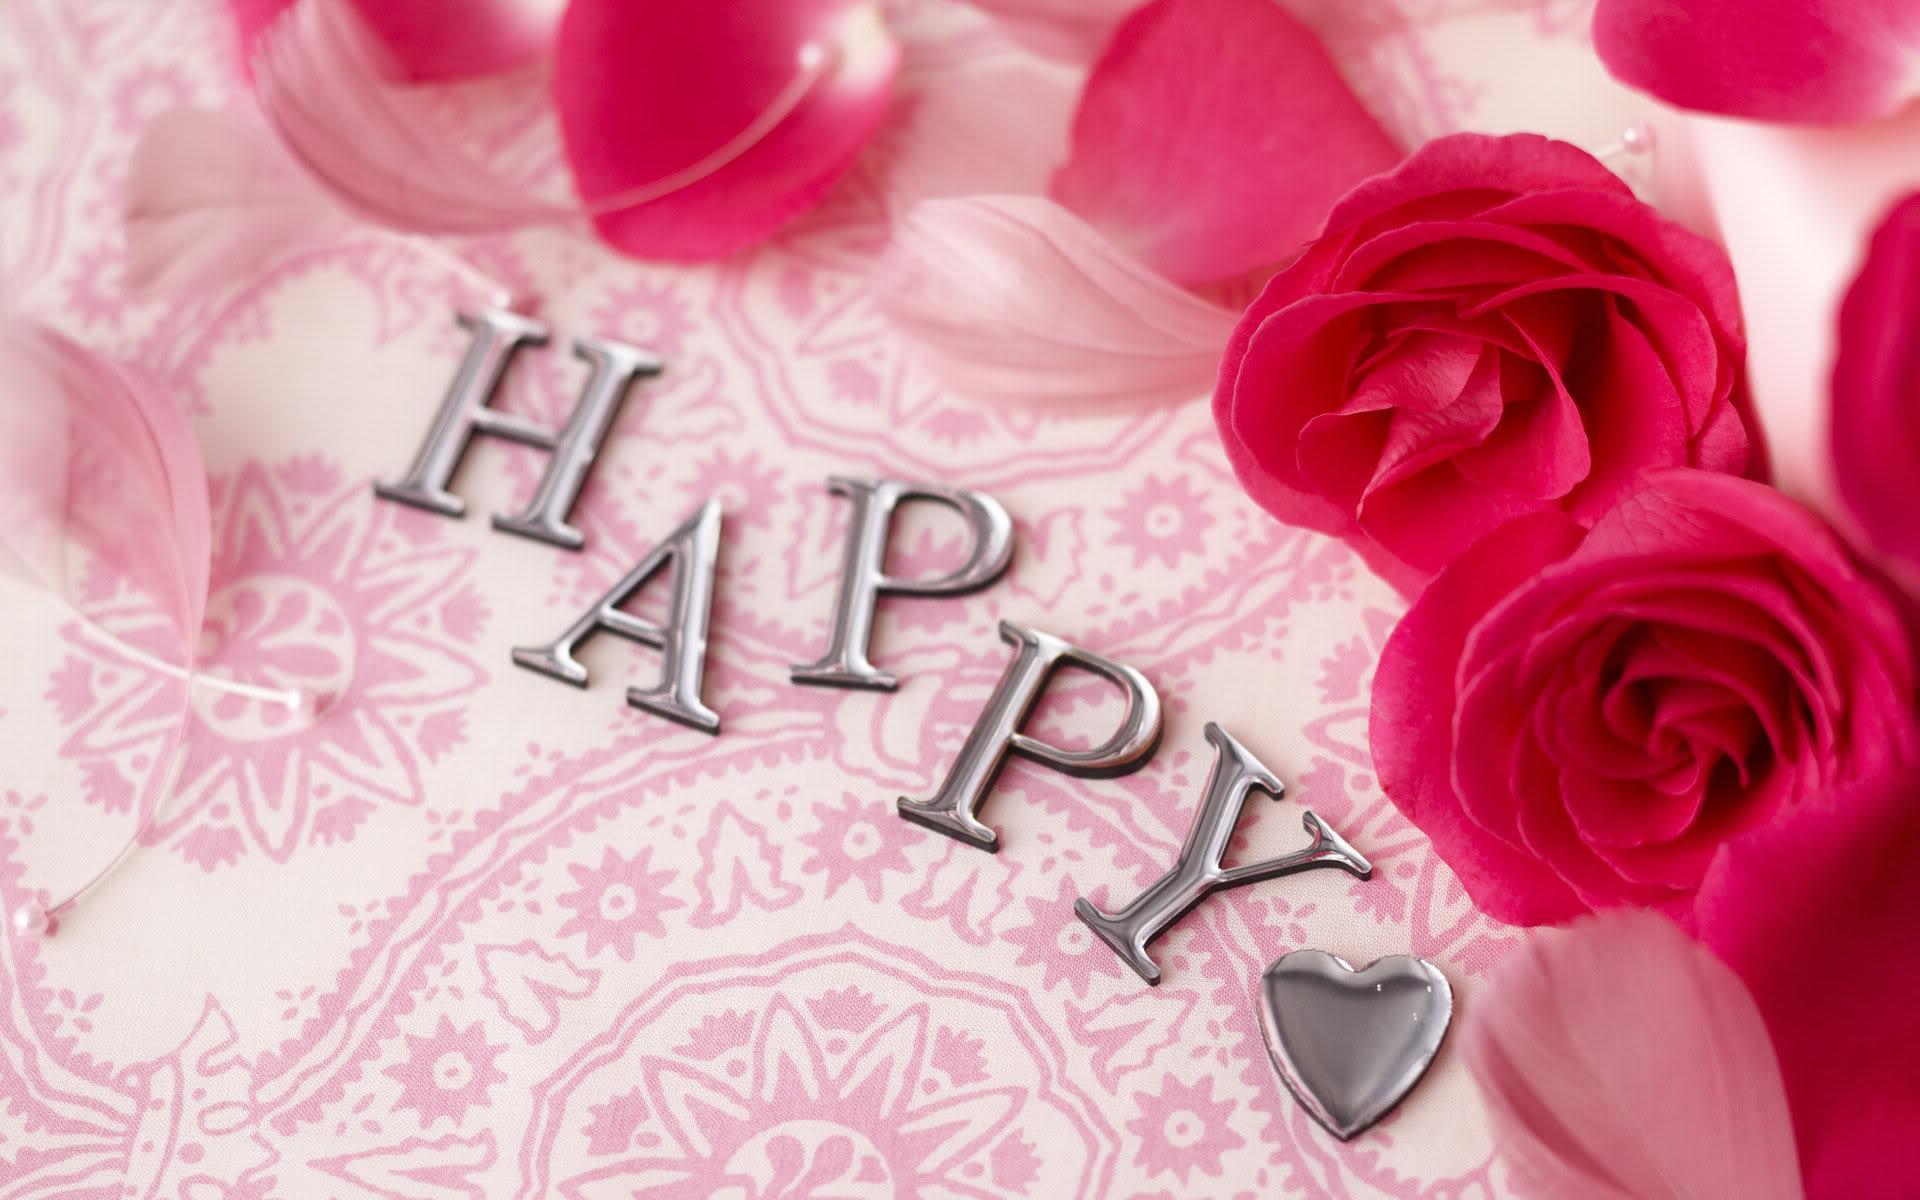 Happy Valentine day free desktop background - free wallpaper image